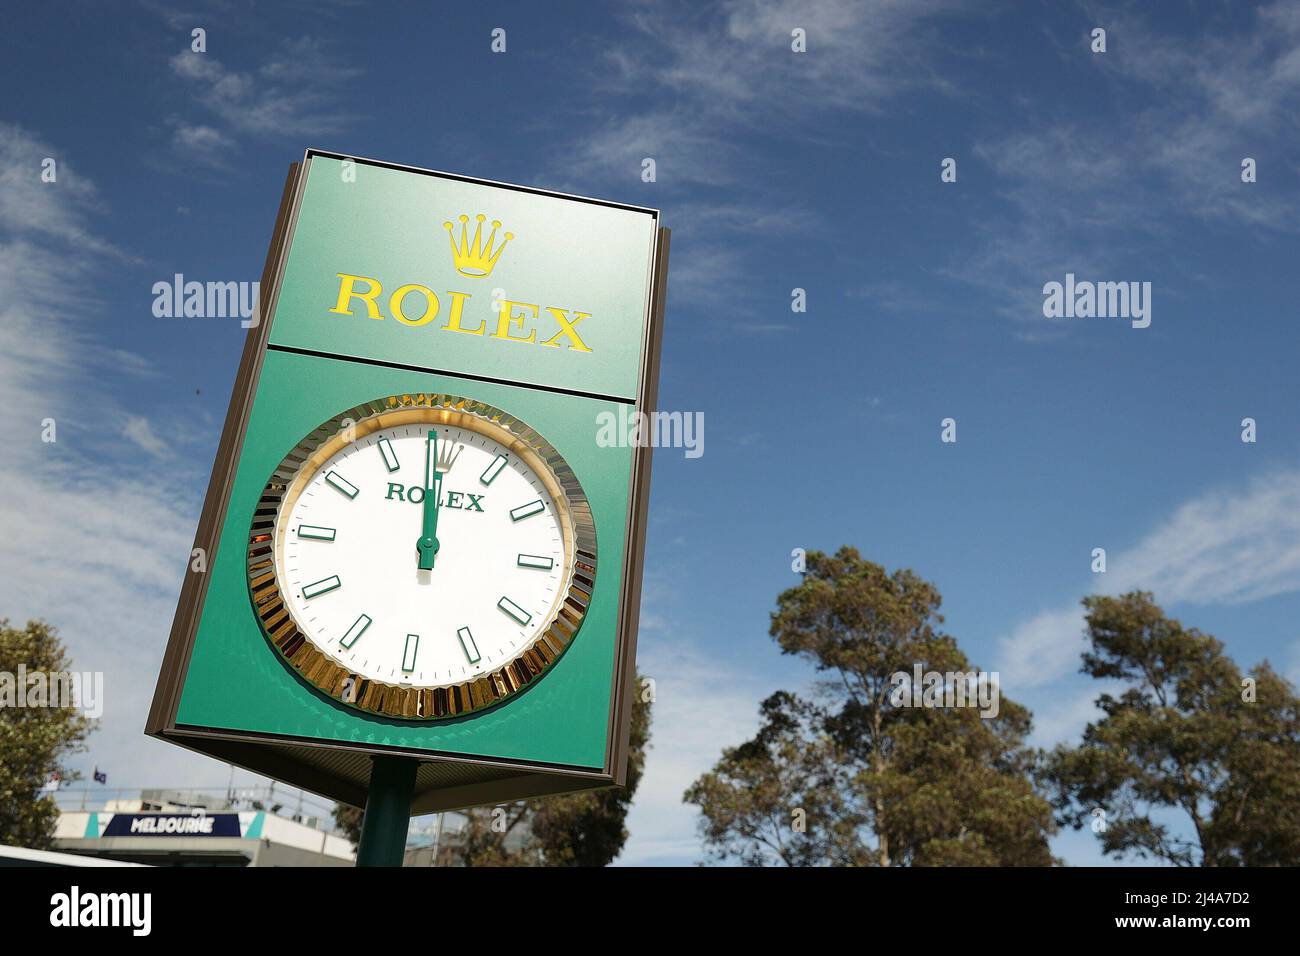 April 10th, 2022, Albert Park, Melbourne, FORMULA 1 ROLEX AUSTRALIAN GRAND PRIX 2022, in the picture impressions from Albert Park in Melbourne, Rolex watch Stock Photo